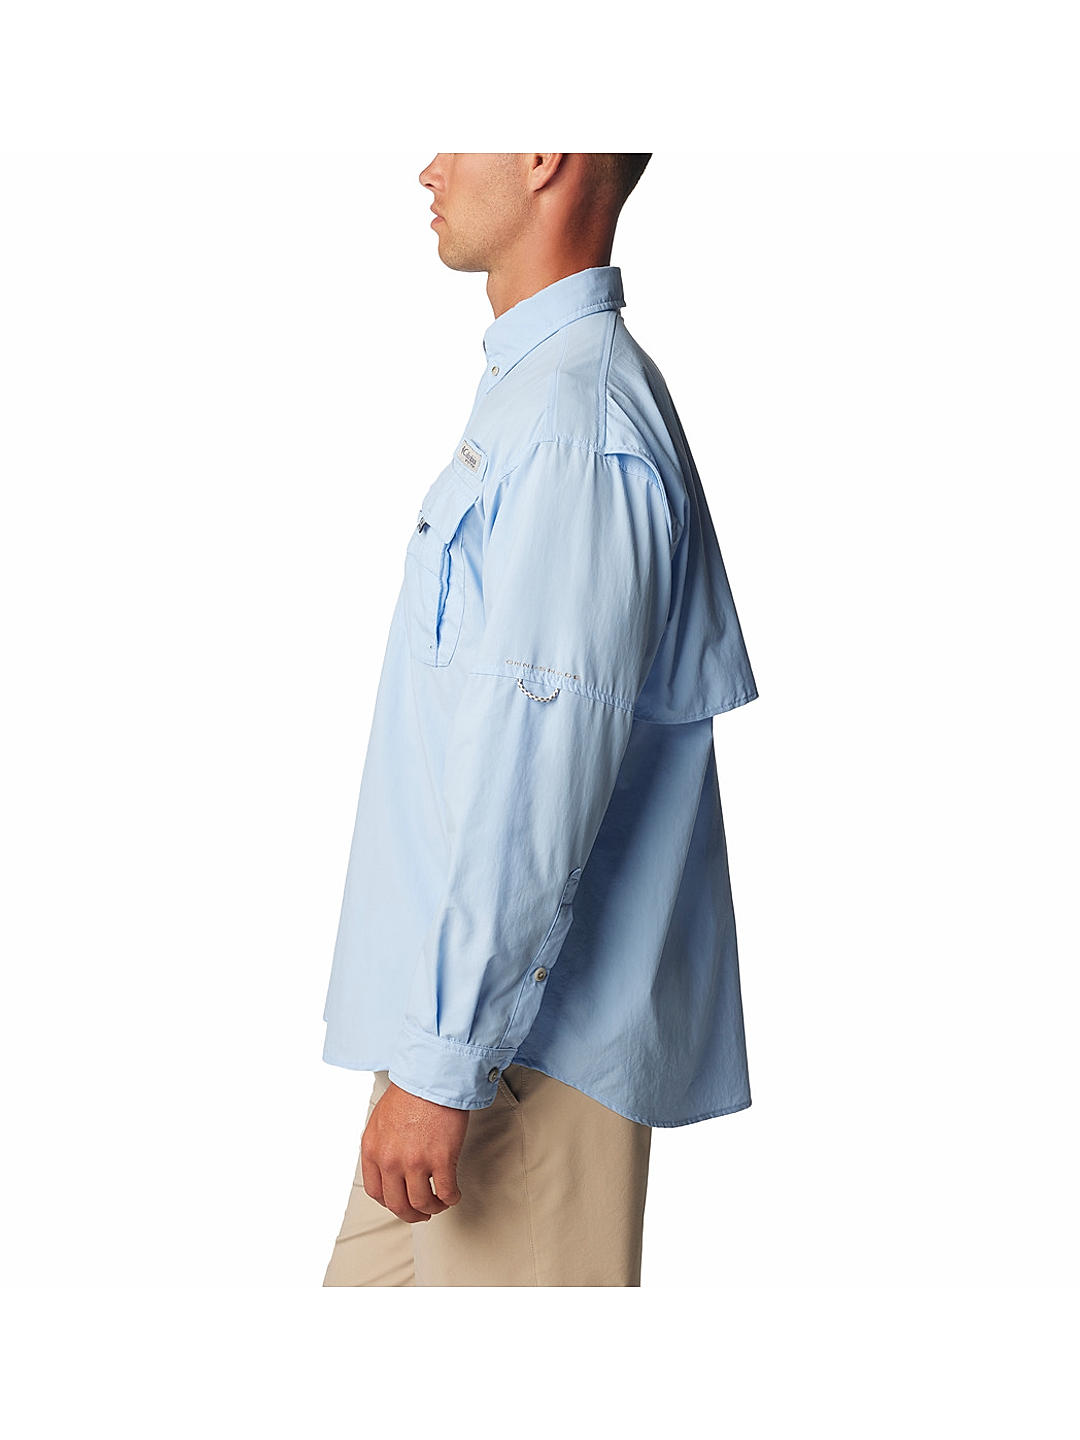 Men's PFG Bonehead™ Long Sleeve Shirt